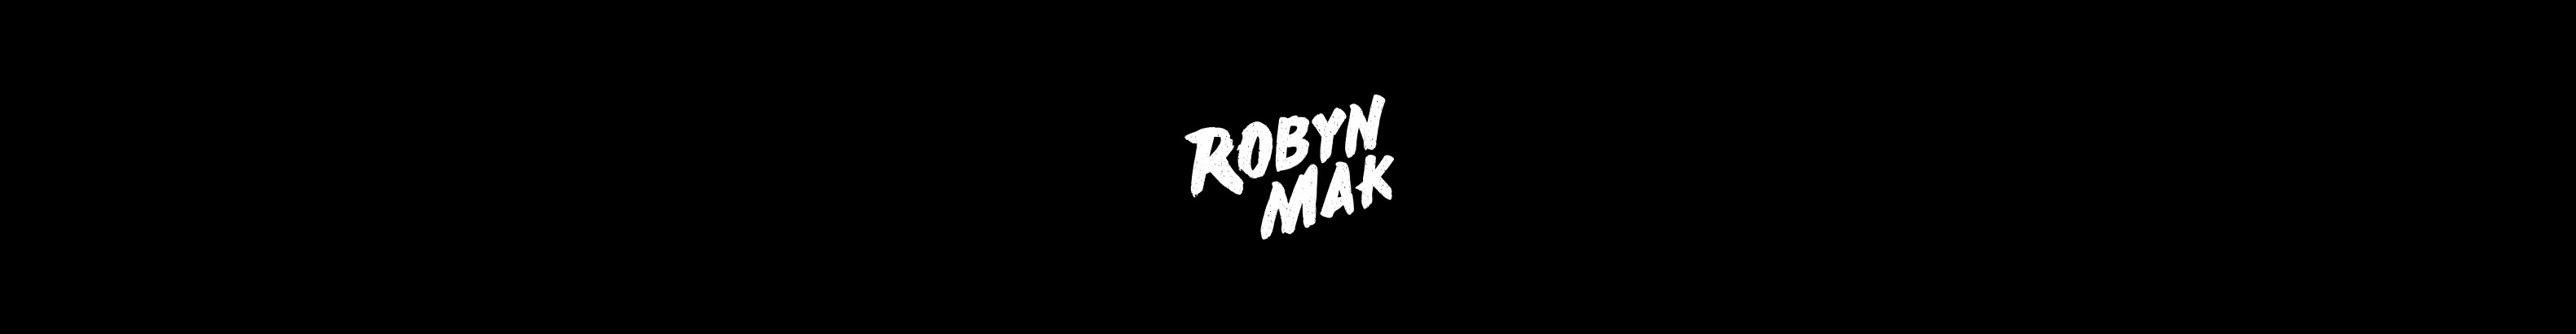 Profielbanner van Robyn Makinson